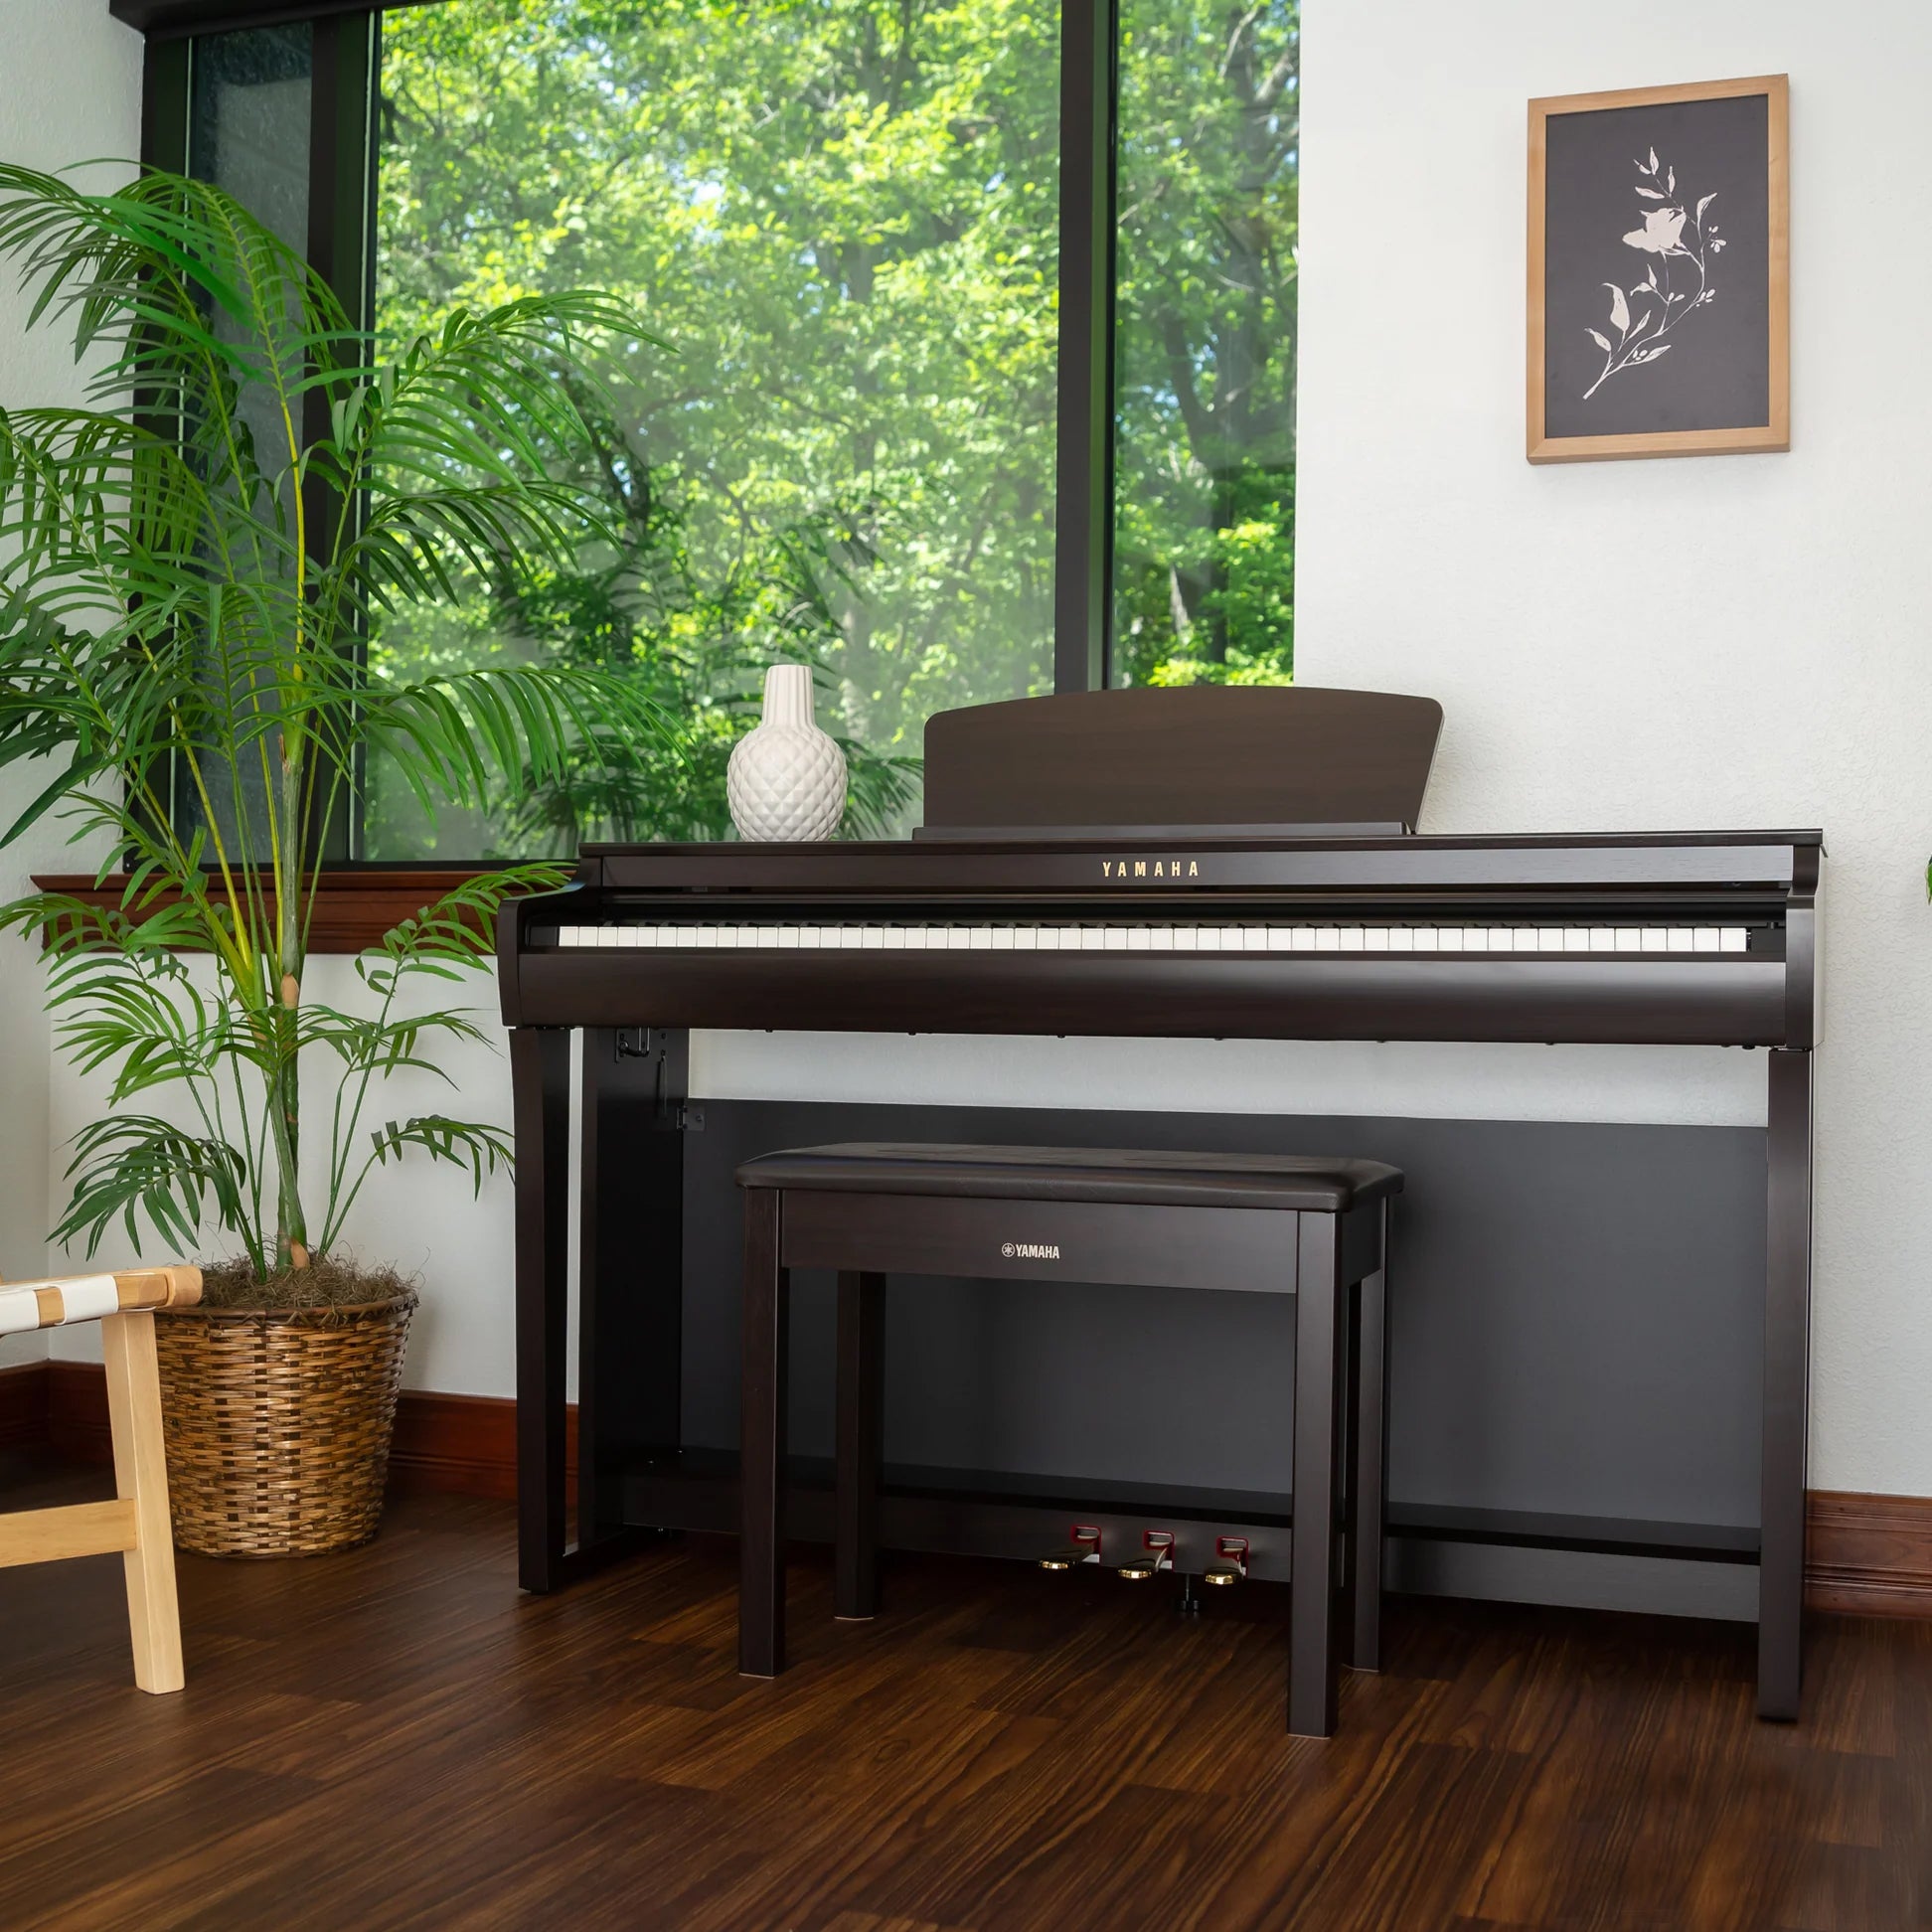 Yamaha Clavinova CLP-725 Digital Piano - Rosewood - in a stylish living room